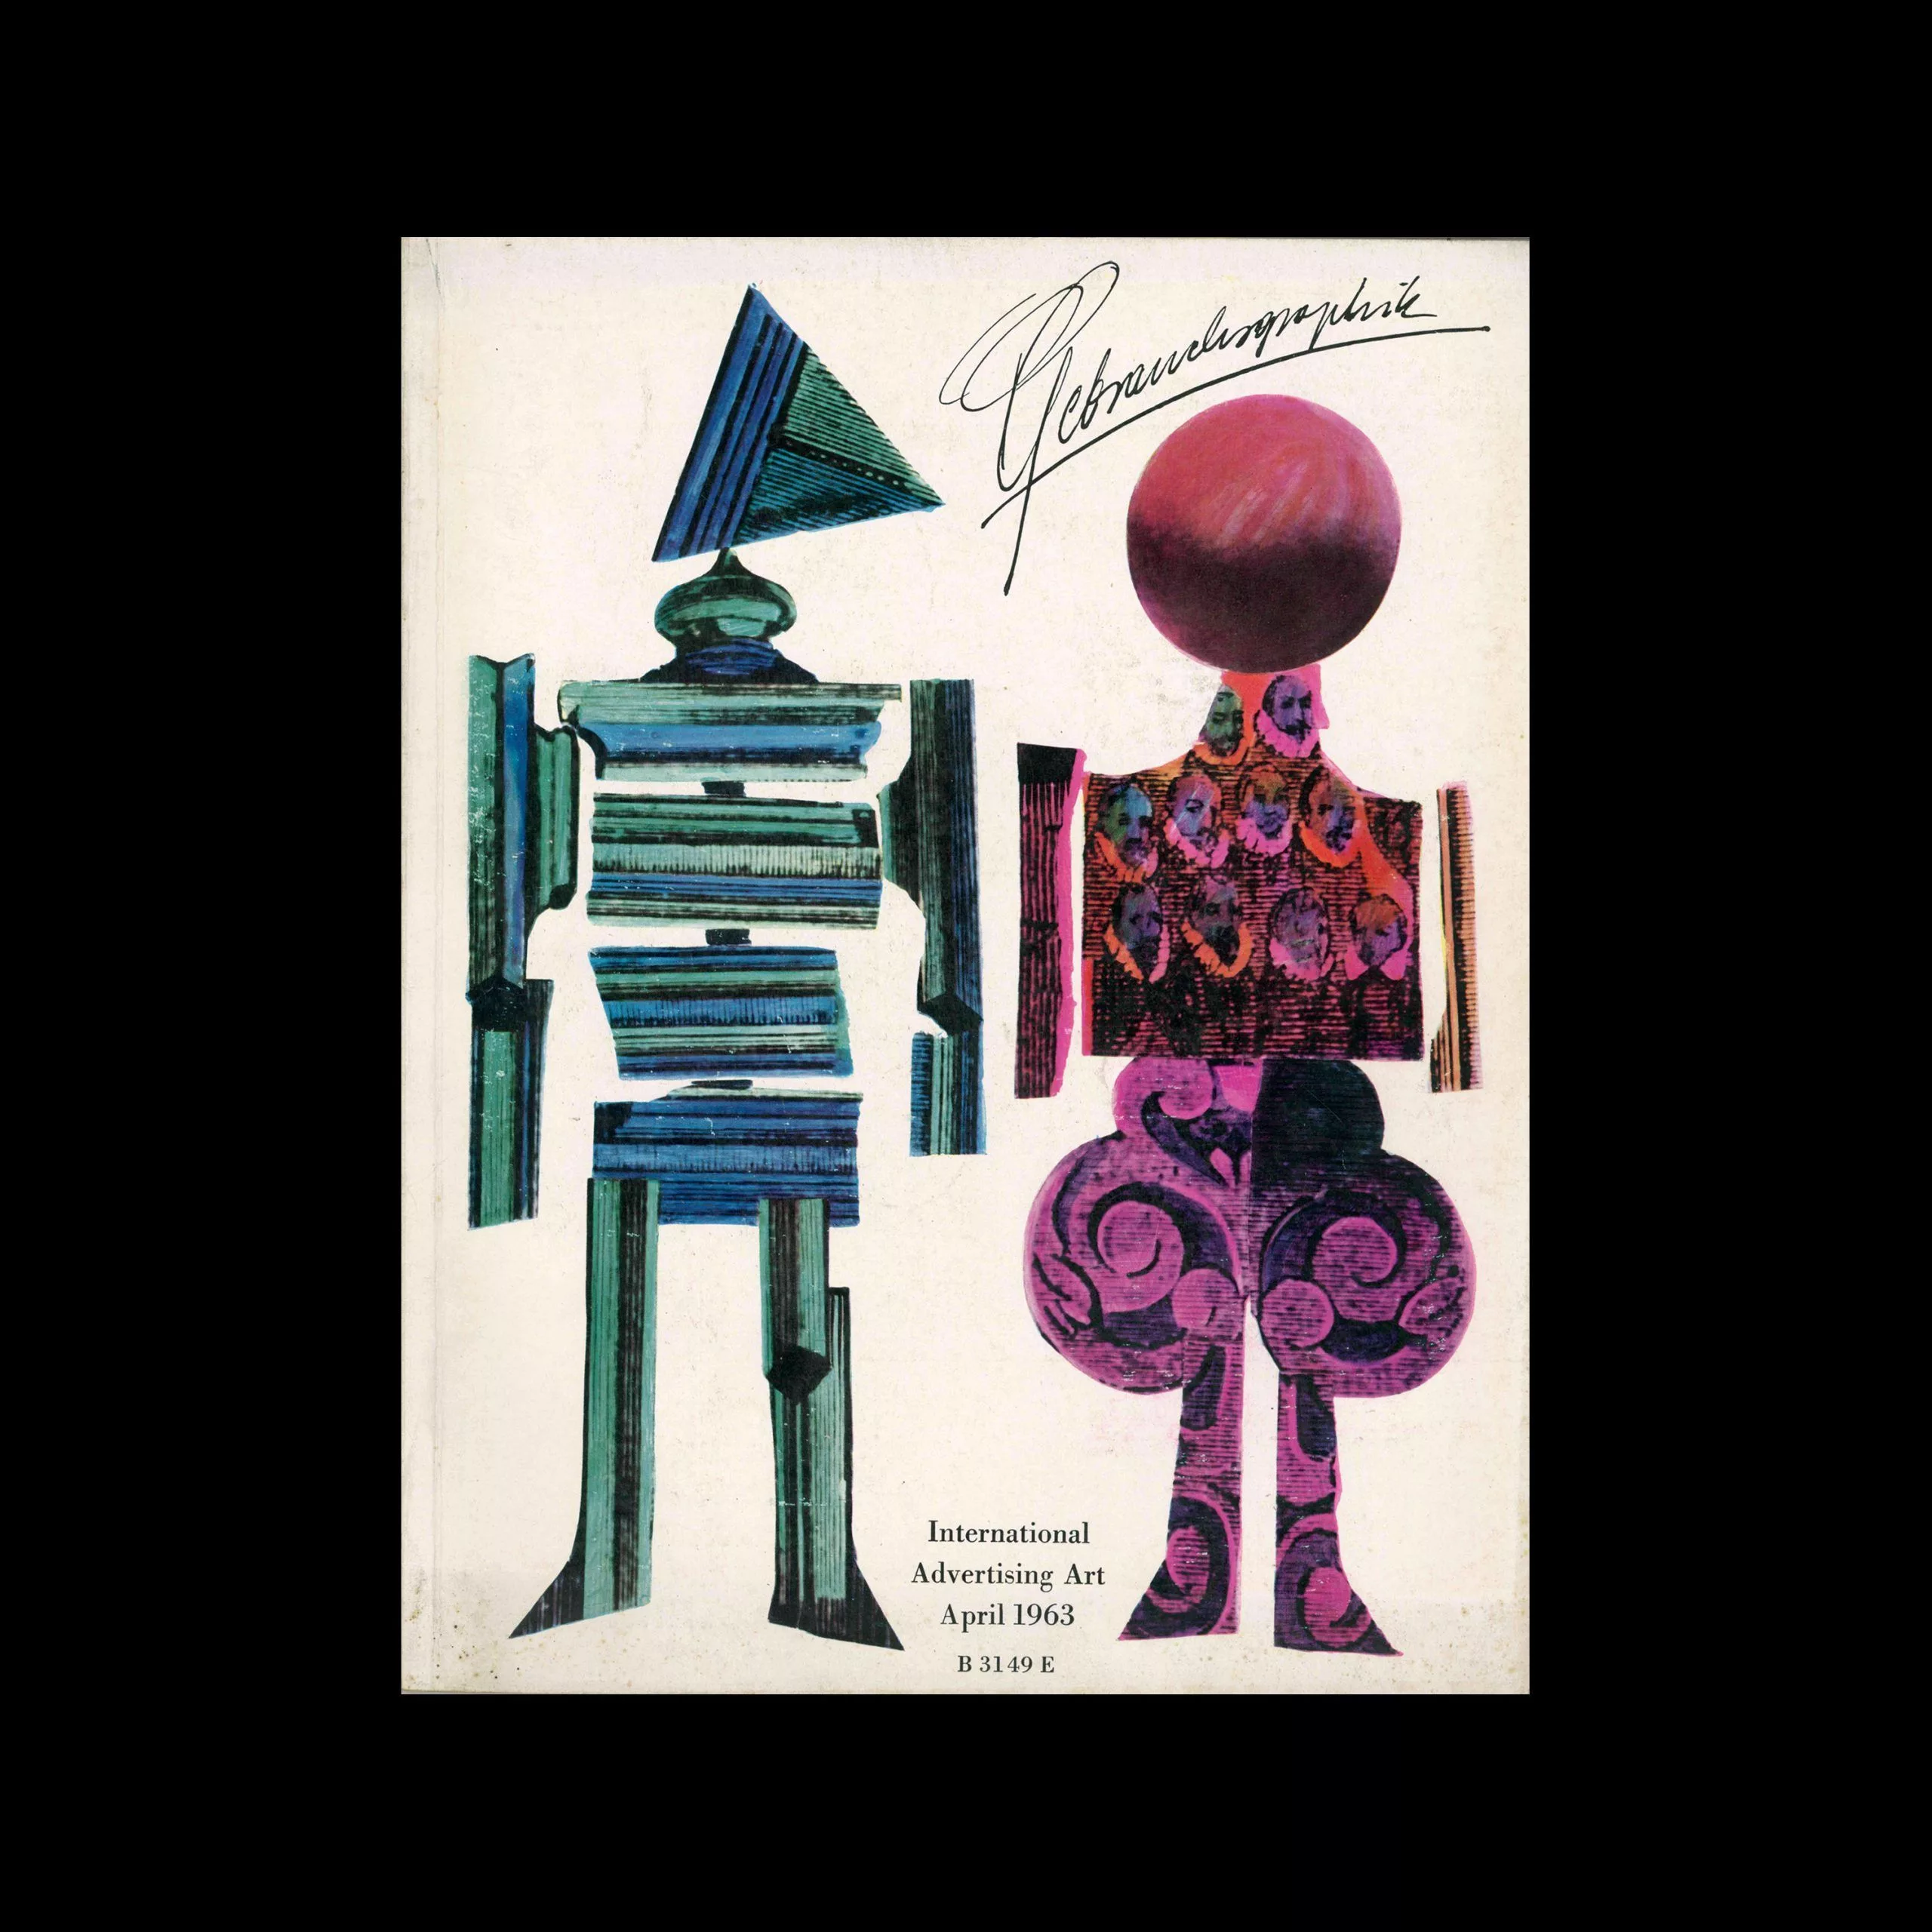 Gebrauchsgraphik, 4, 1963. Covers design by Roman Cieślewicz